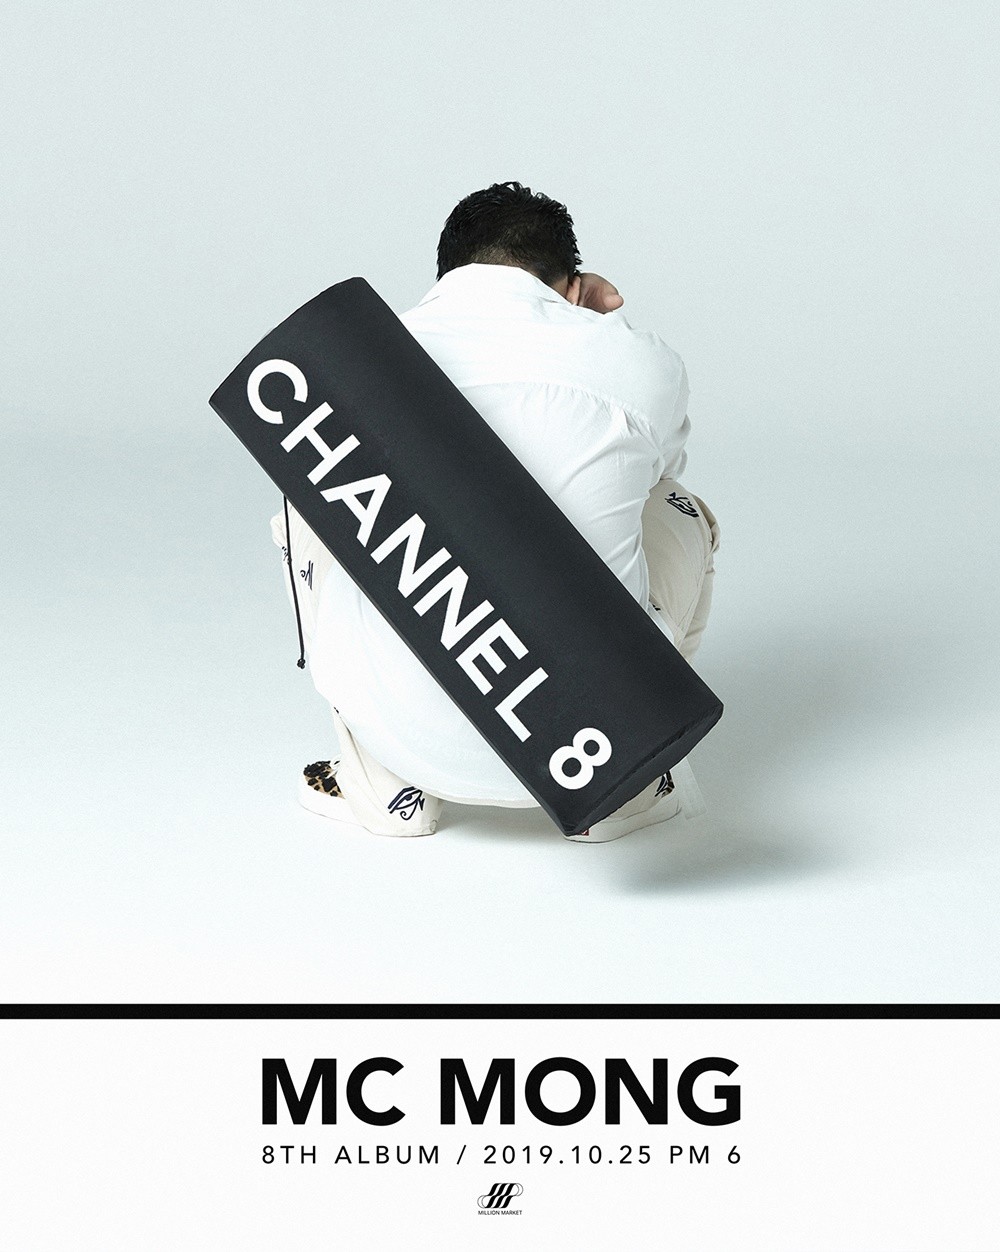 [РЕЛИЗ] MC Mong представил клип на песню "Channel"